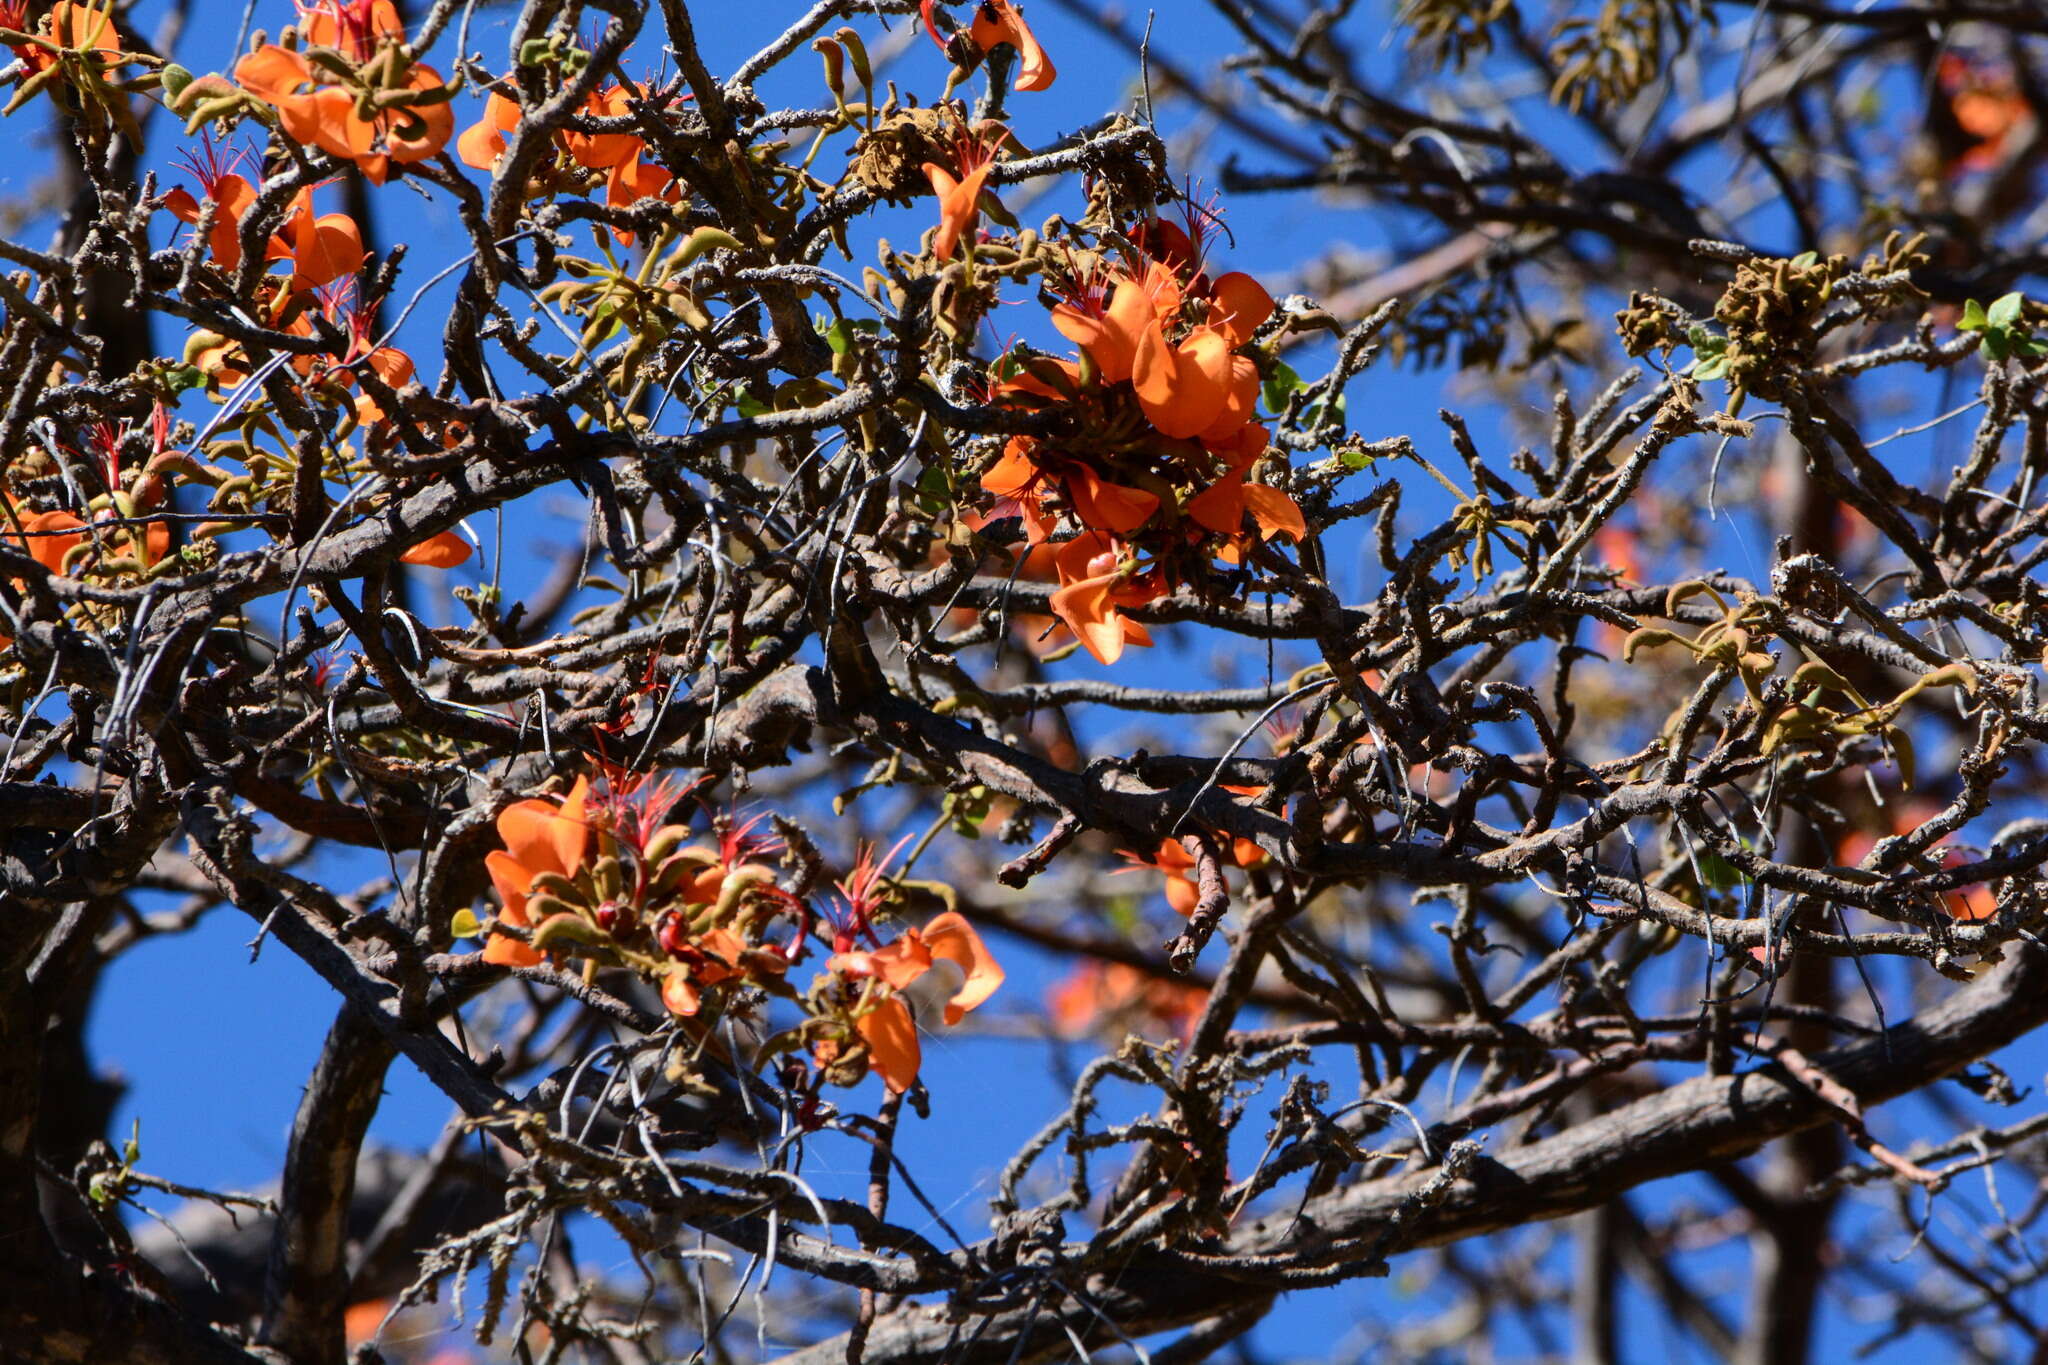 Image of Erythrina velutina Willd.